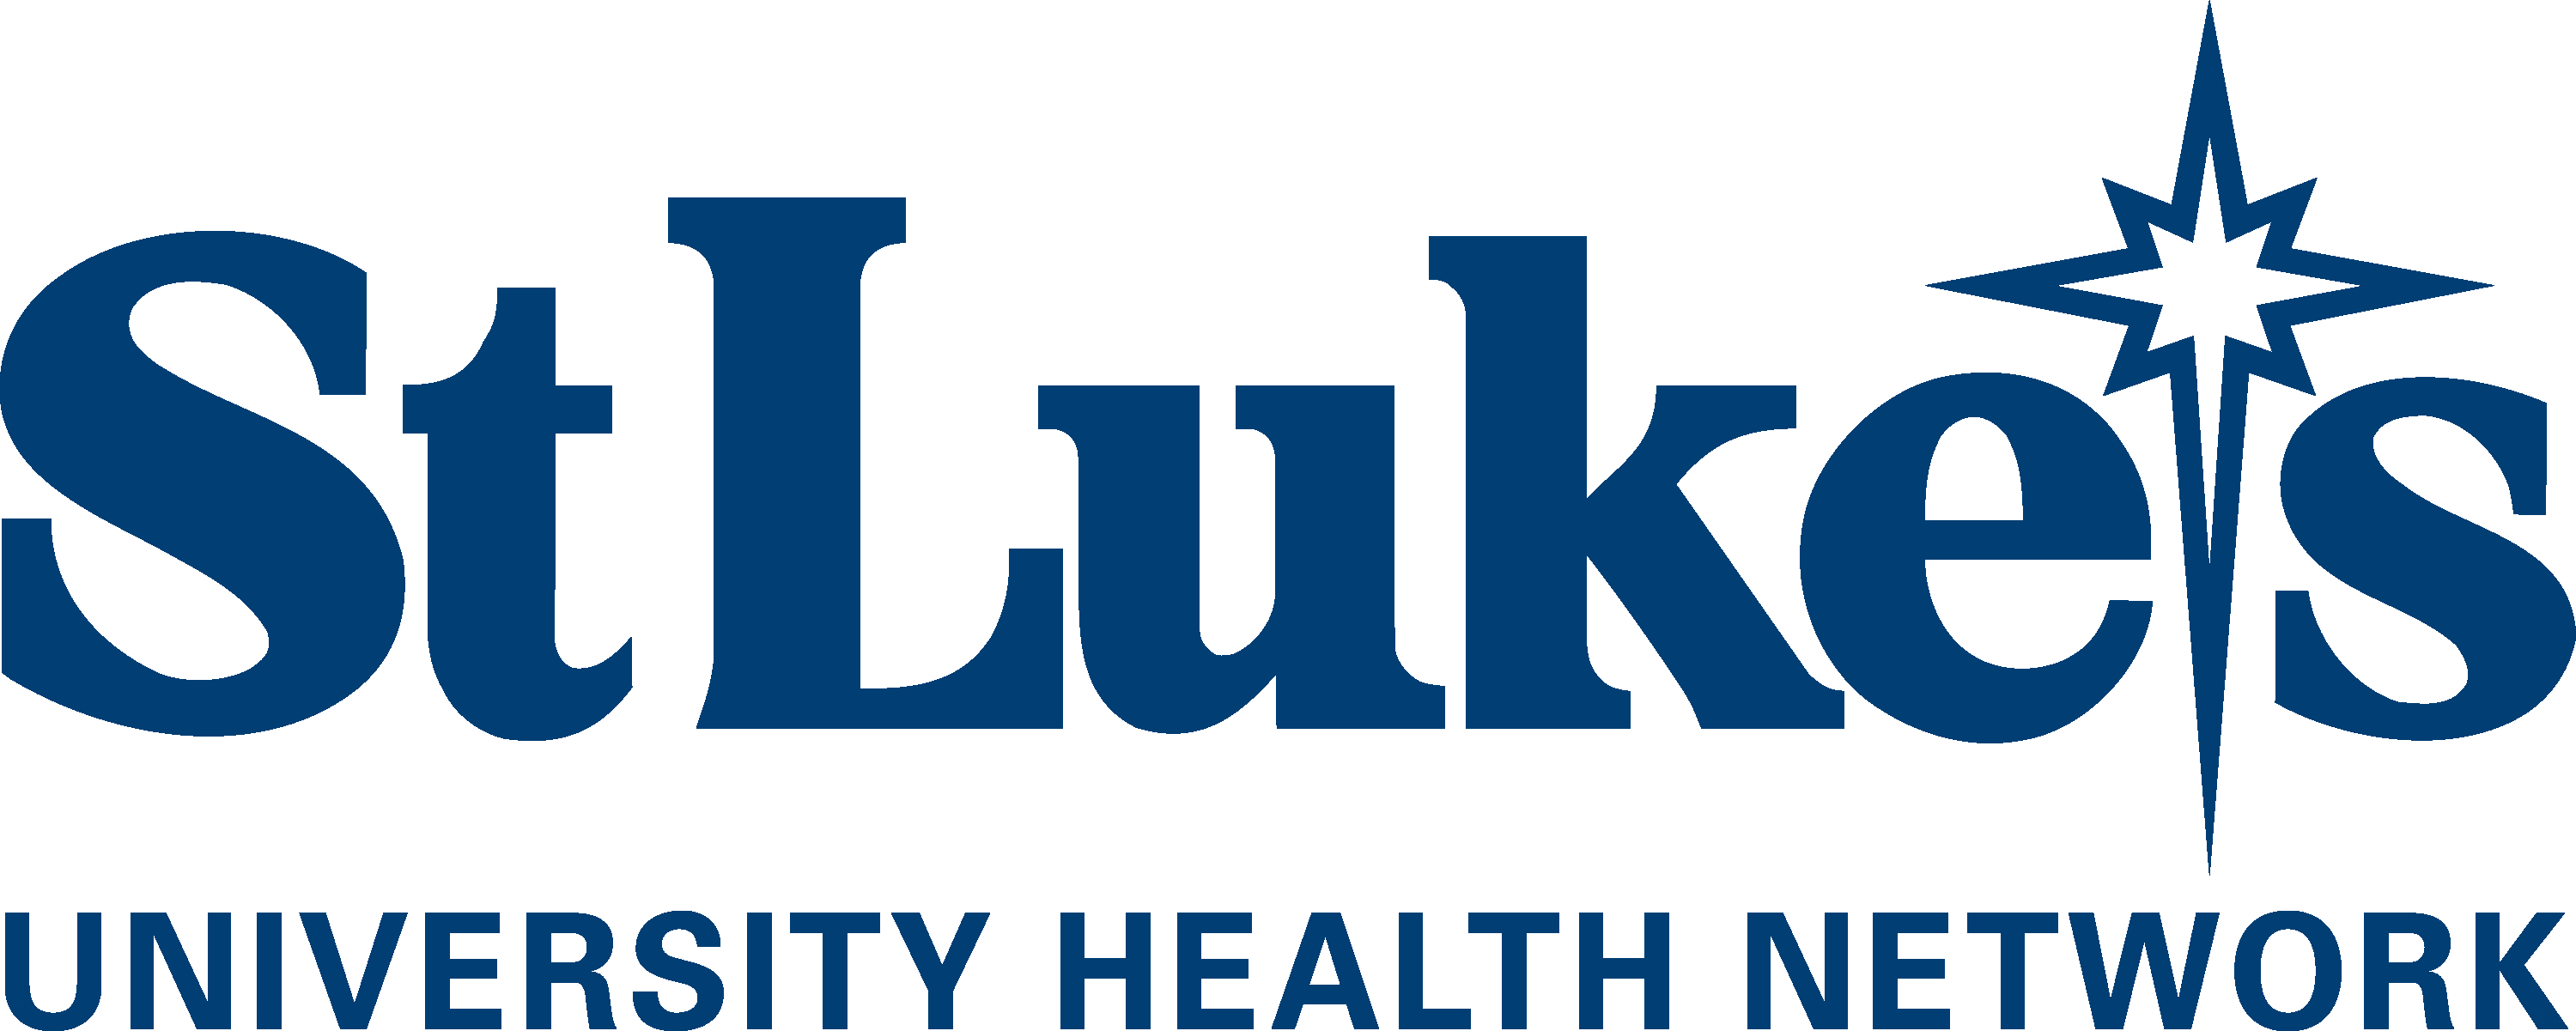 St. Luke's University Health Network Company Logo